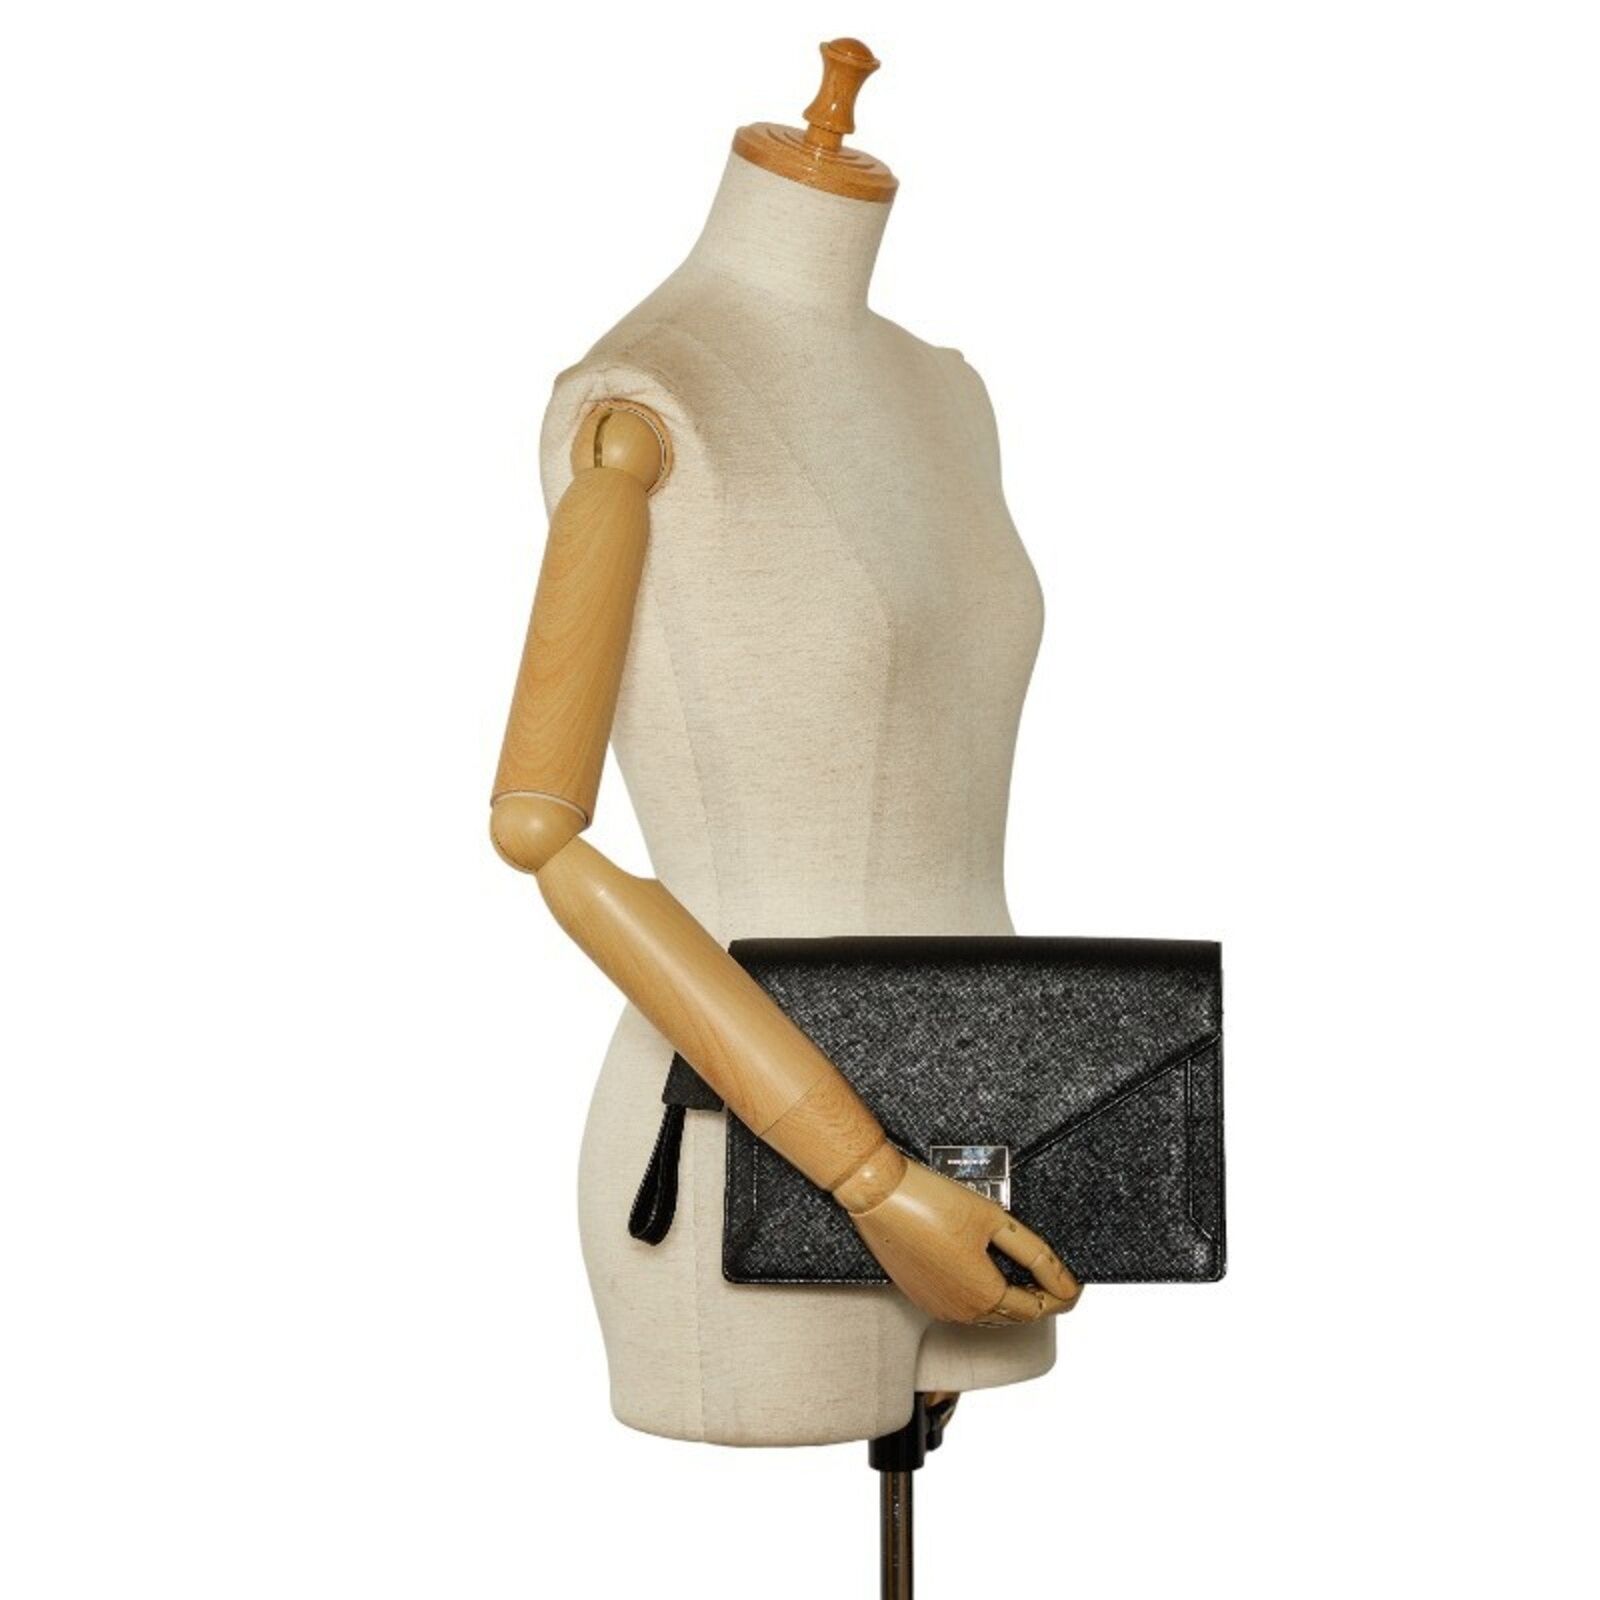 BURBERRY Clutch Bag Second Black Leather Women's | eBay